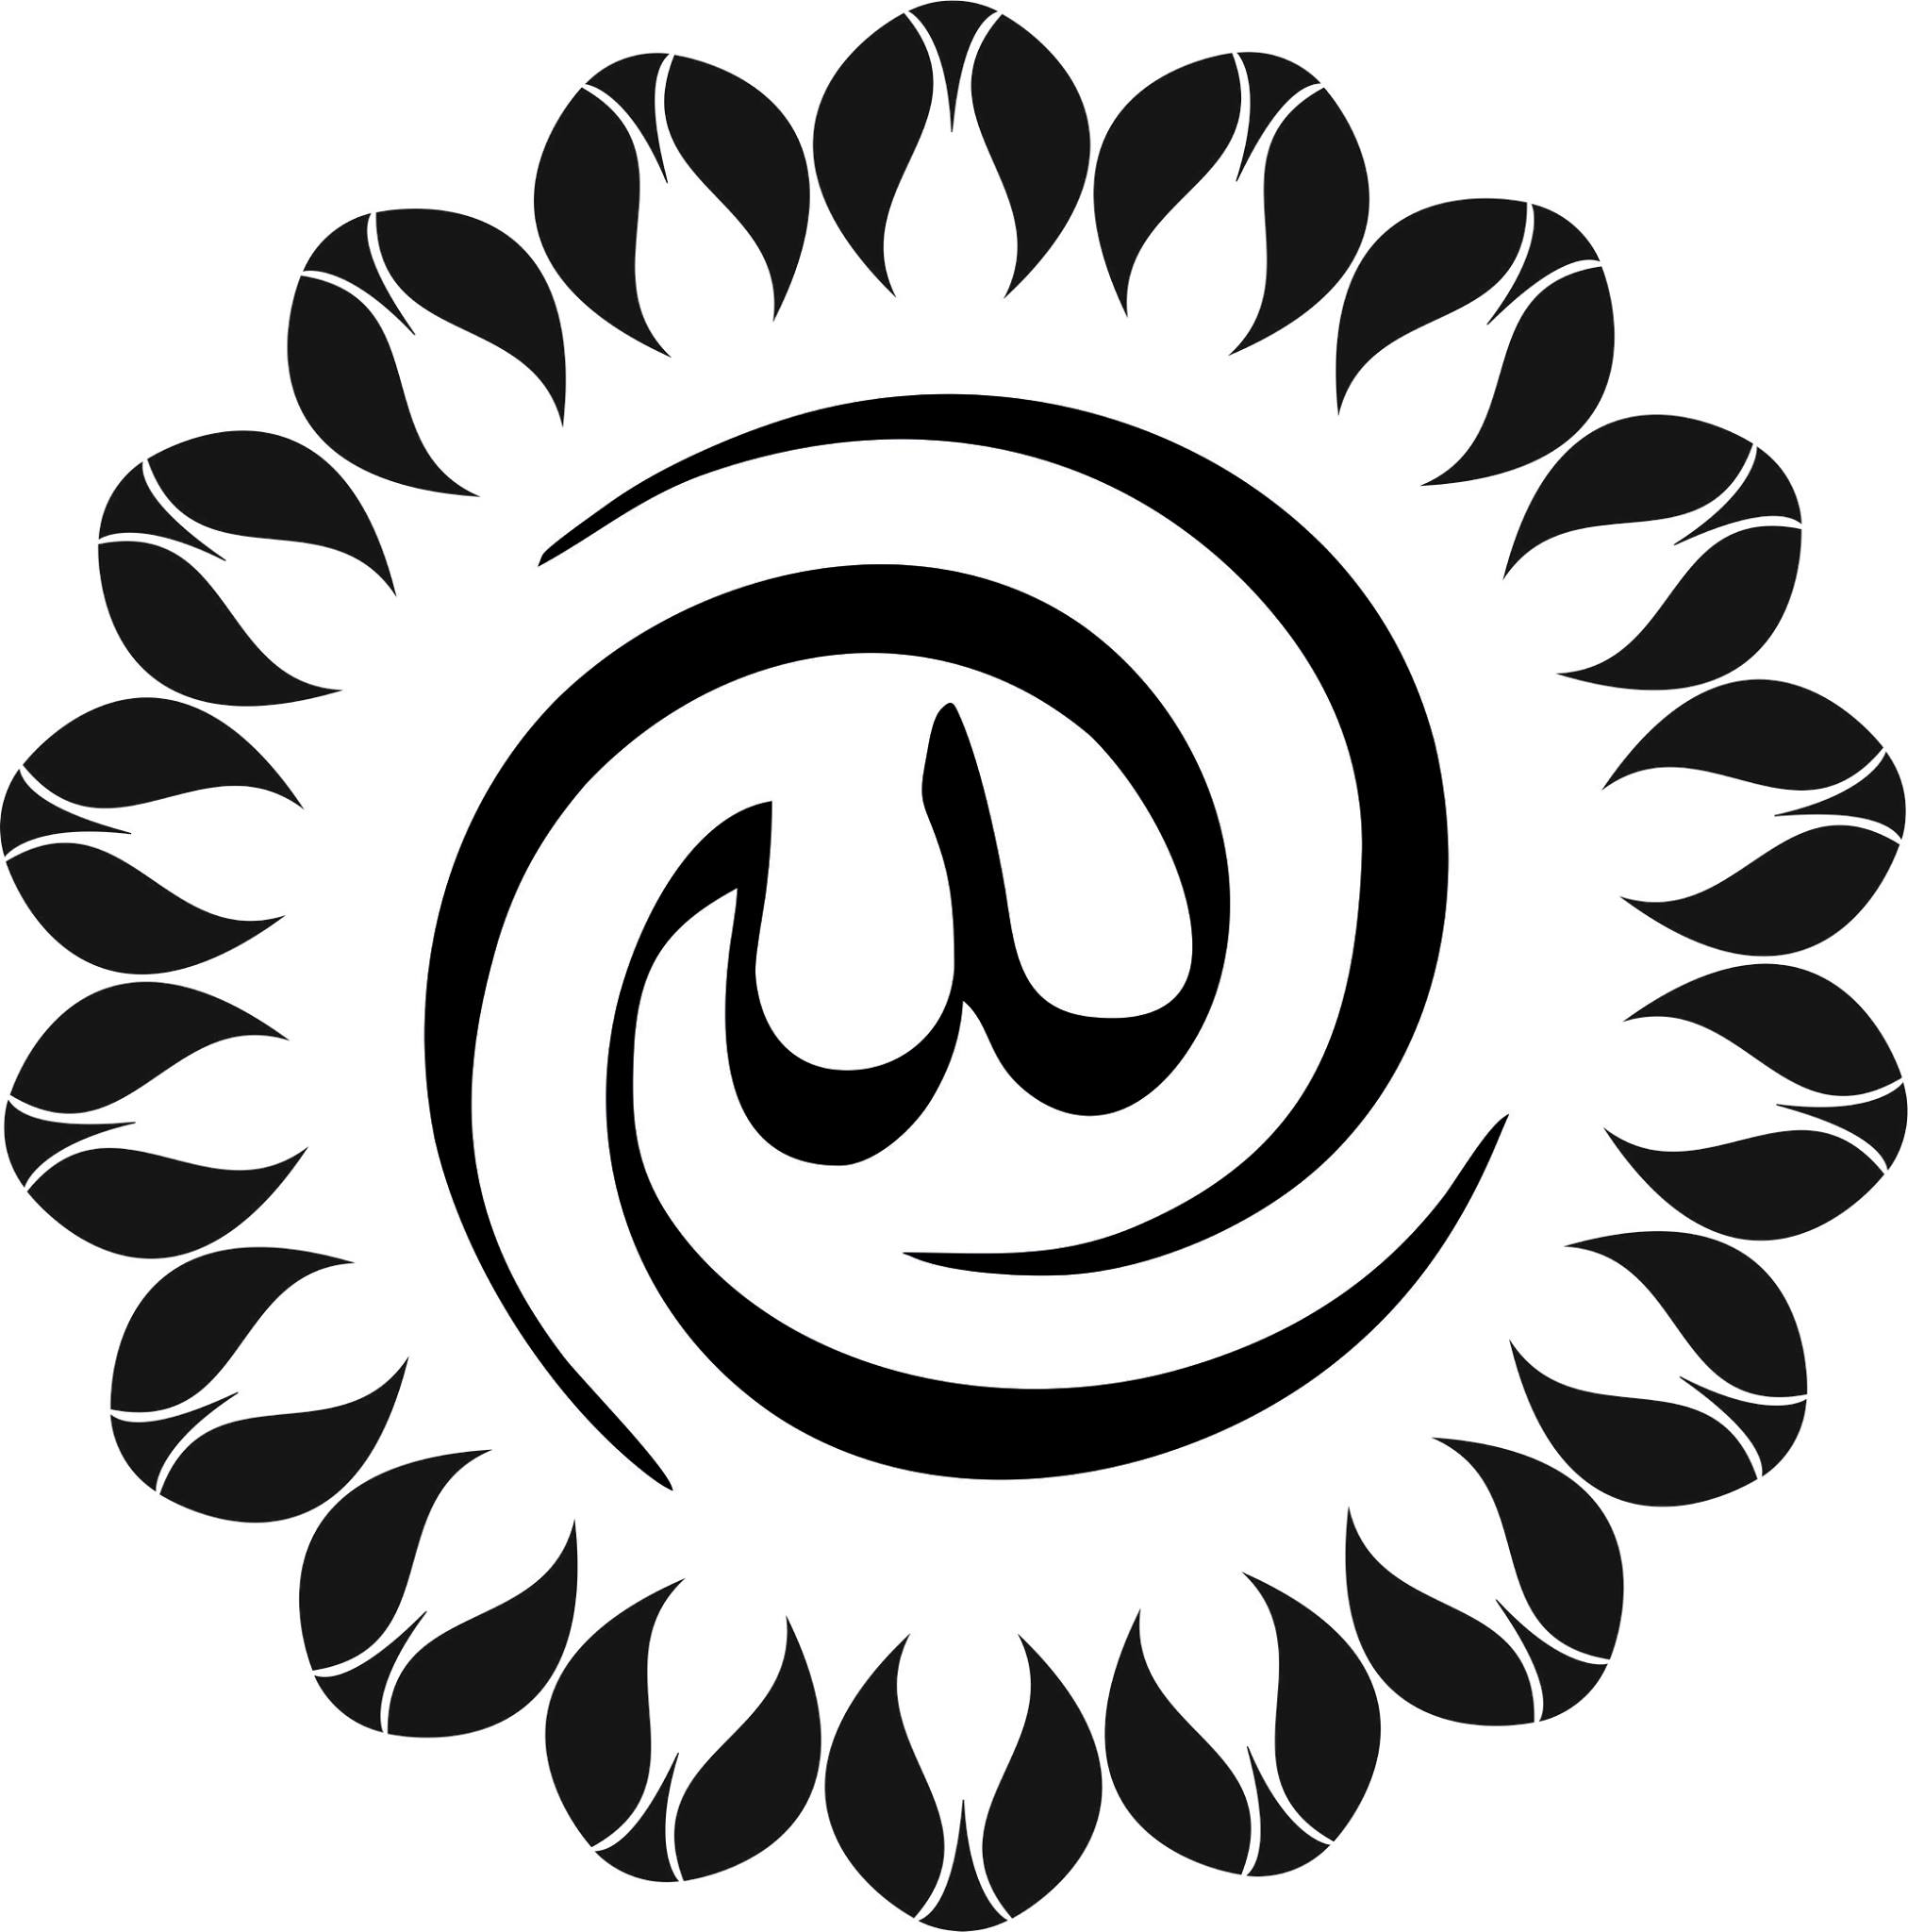 Allah In Arabic Calligraphy Vector Art jpg Image